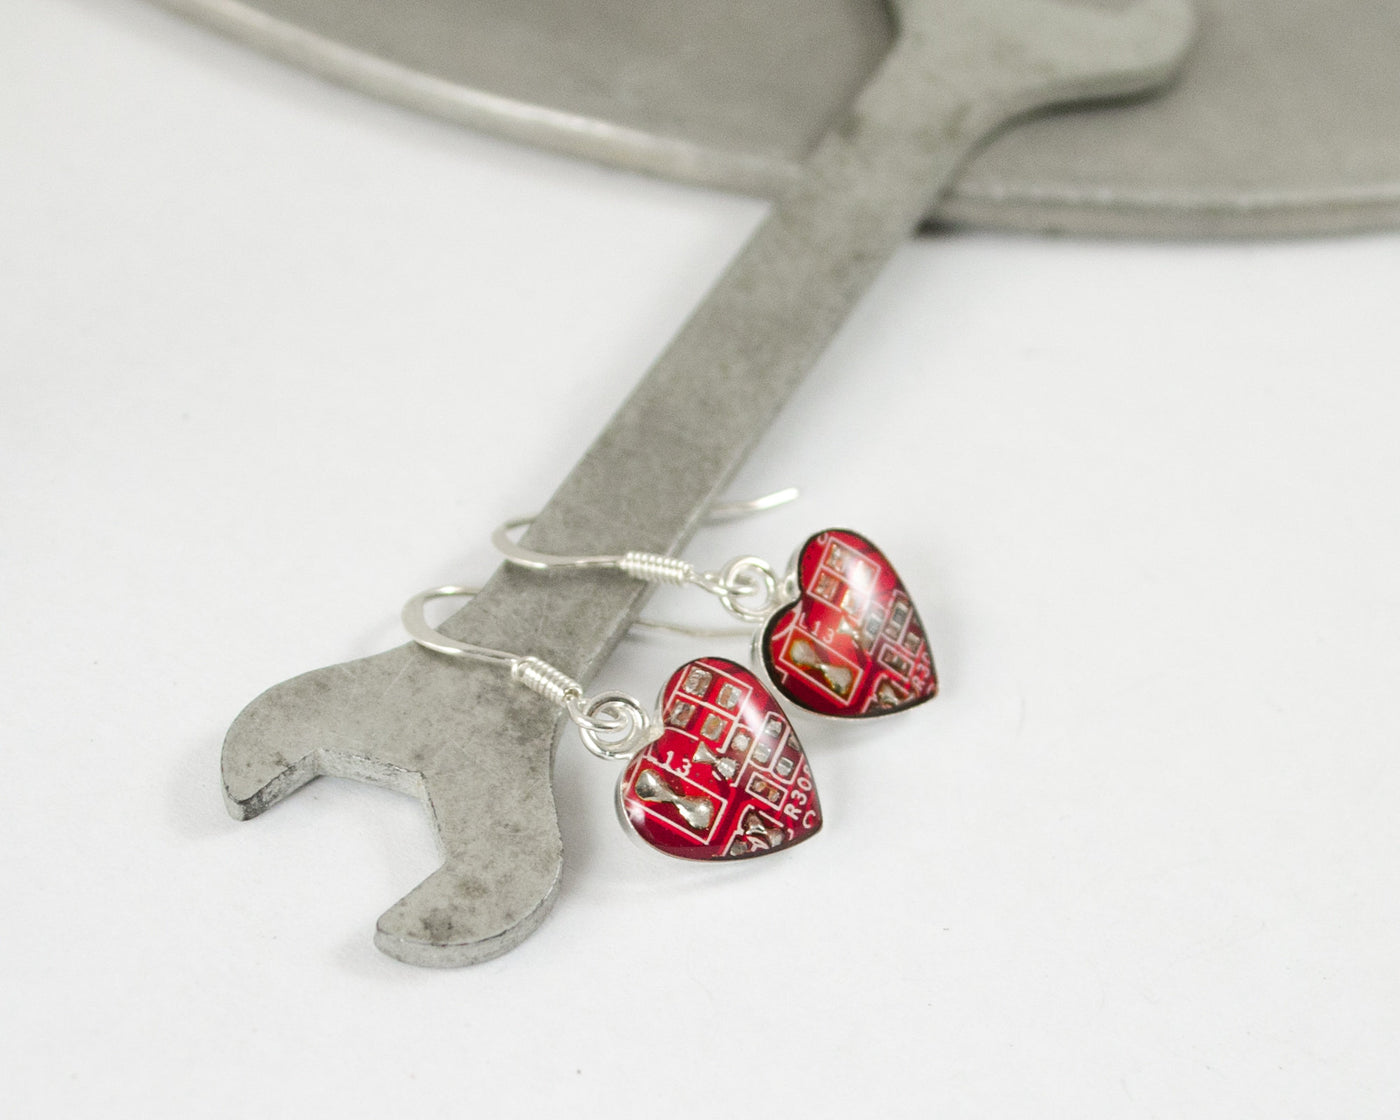 Tiny Circuit Board Heart Dangle Earrings